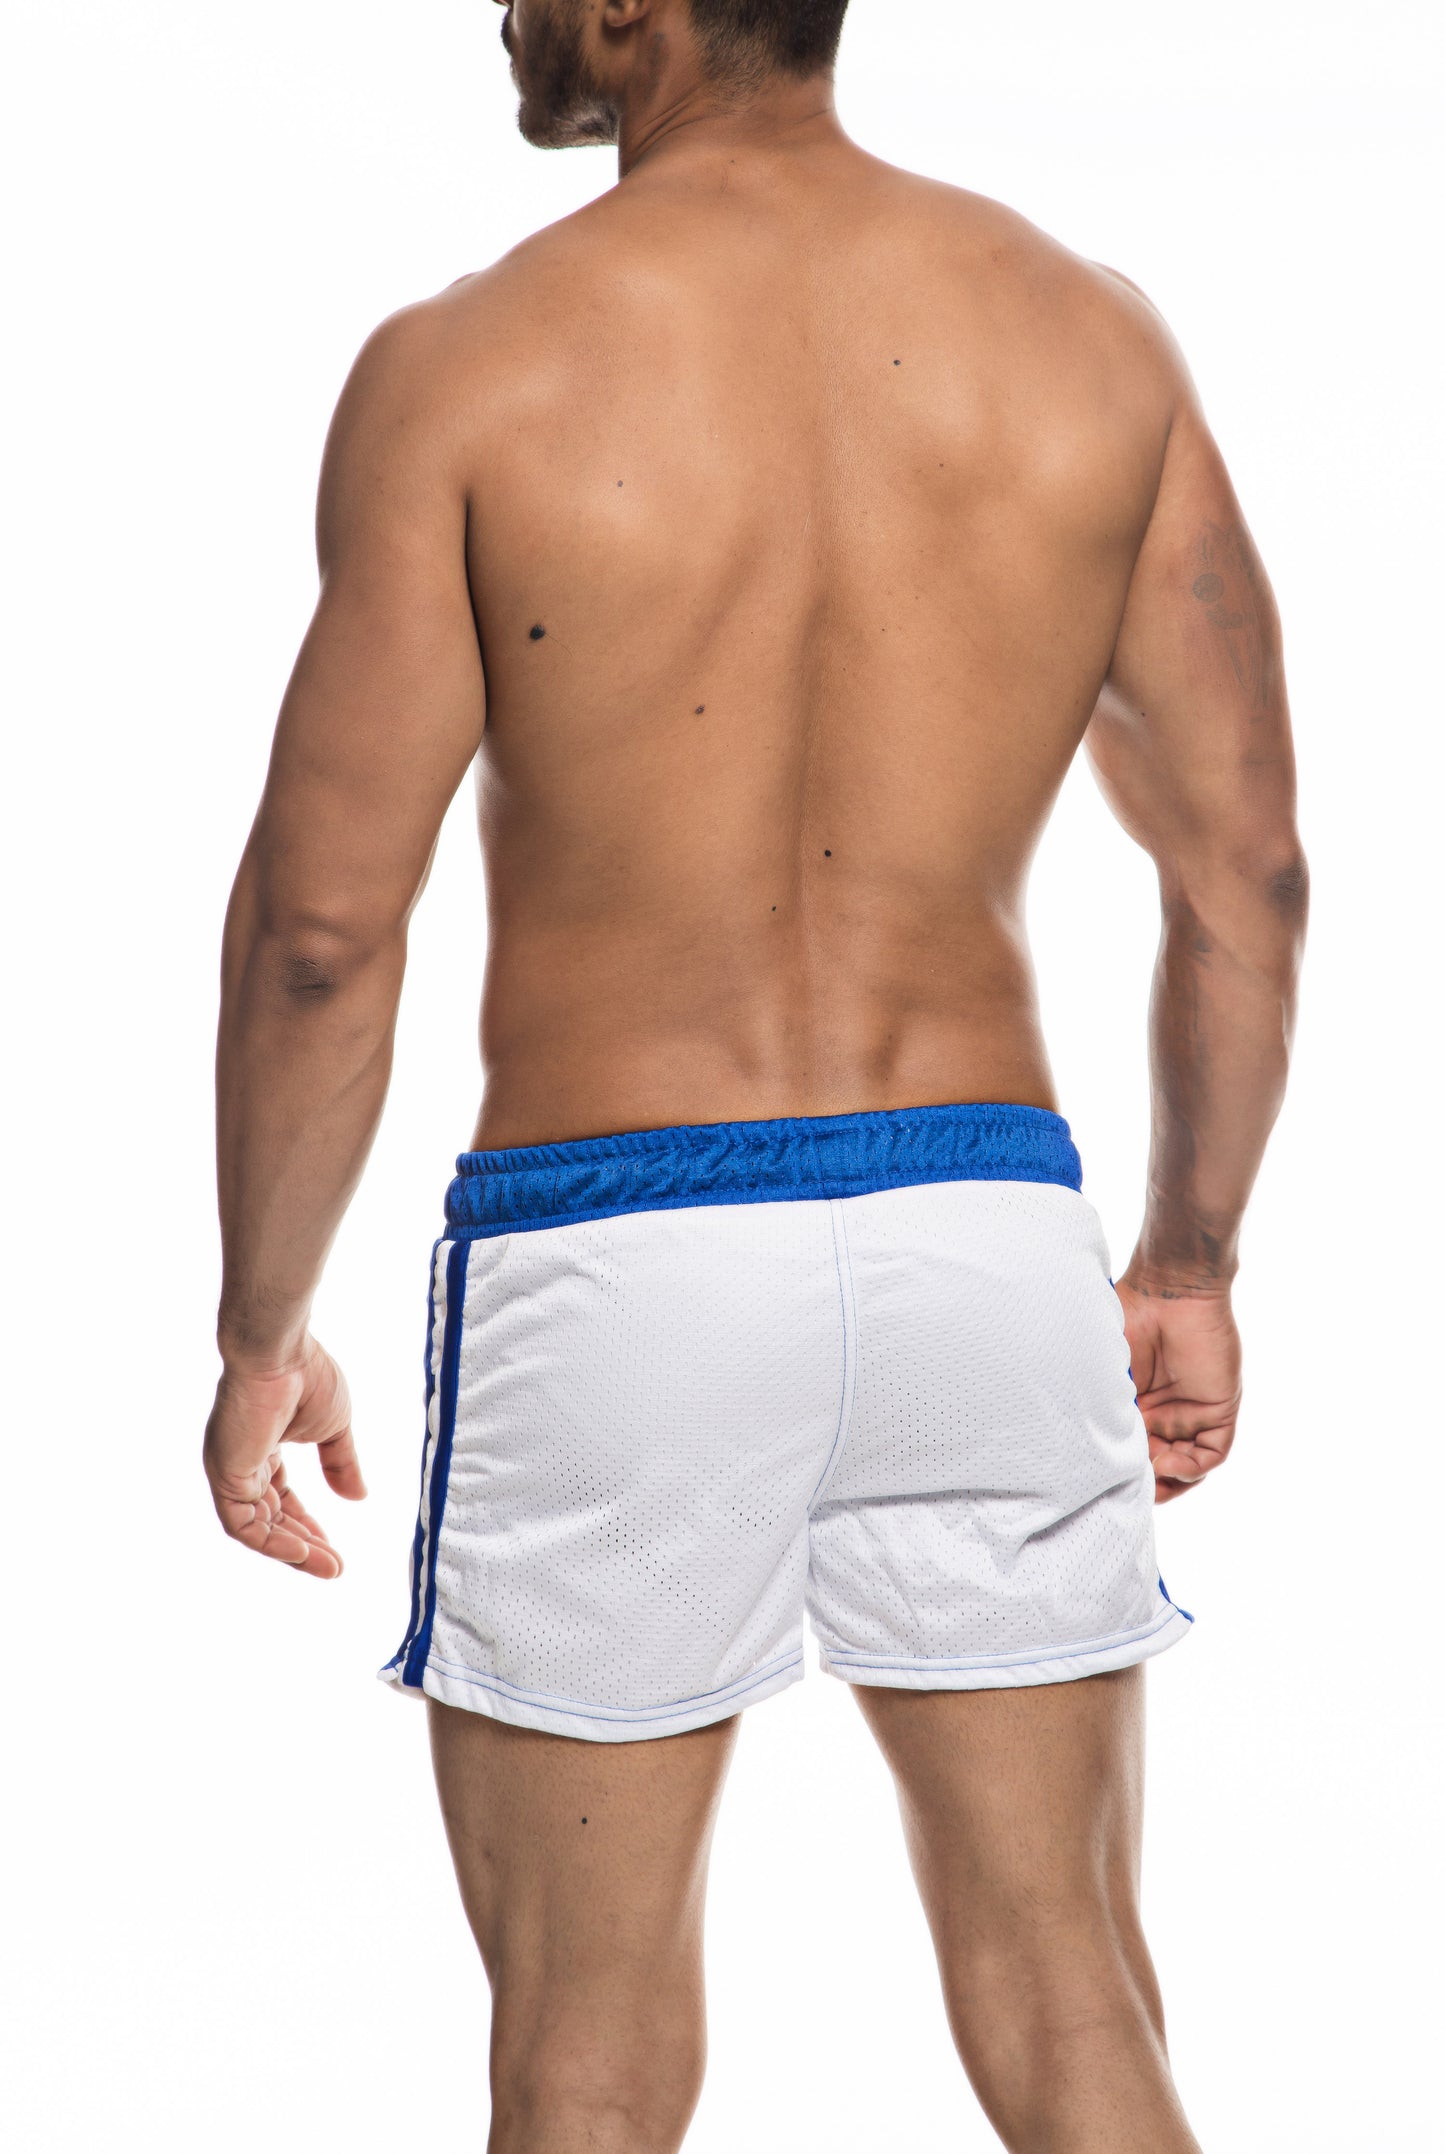 Men's Swim Trunks Mesh Lined Shorts, Sport Boxer And Home wear